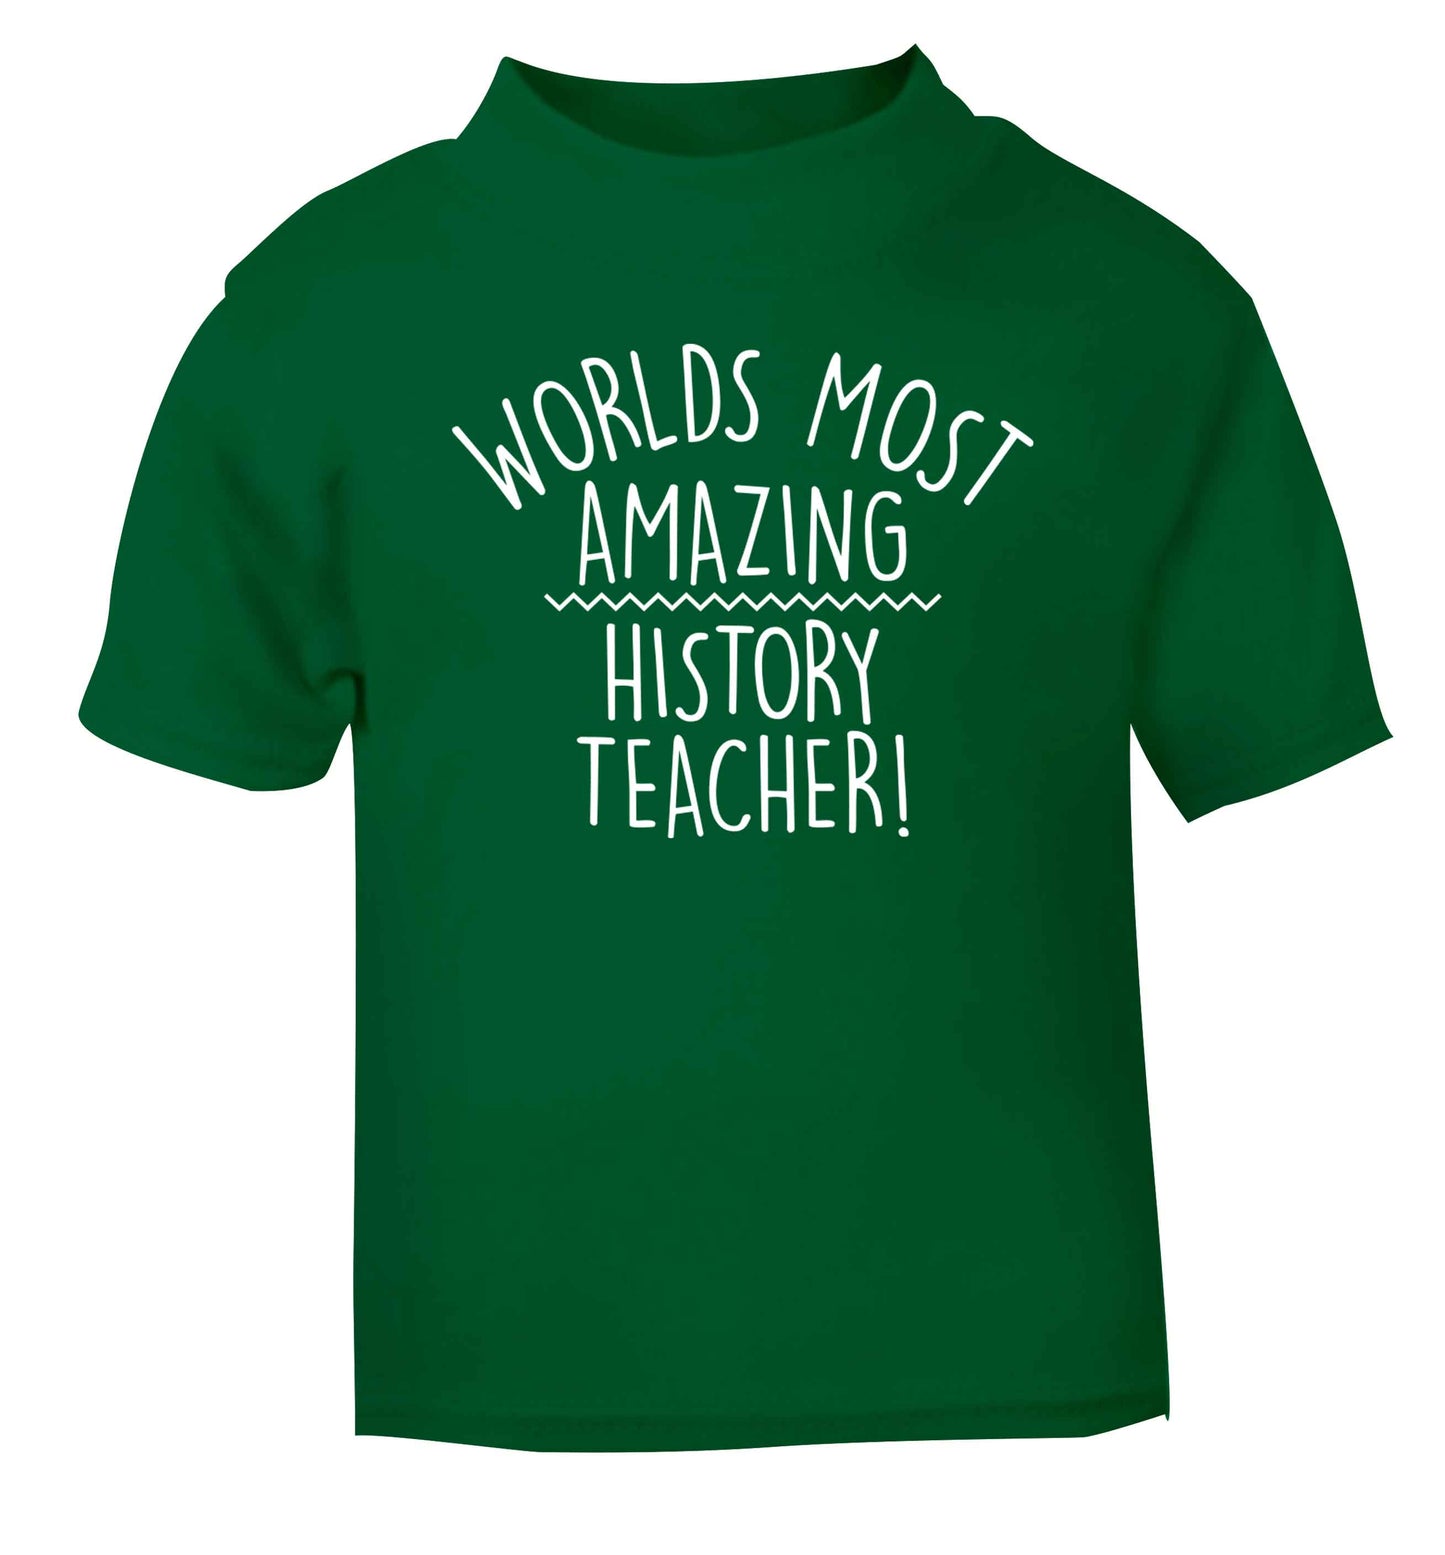 Worlds most amazing History teacher green baby toddler Tshirt 2 Years